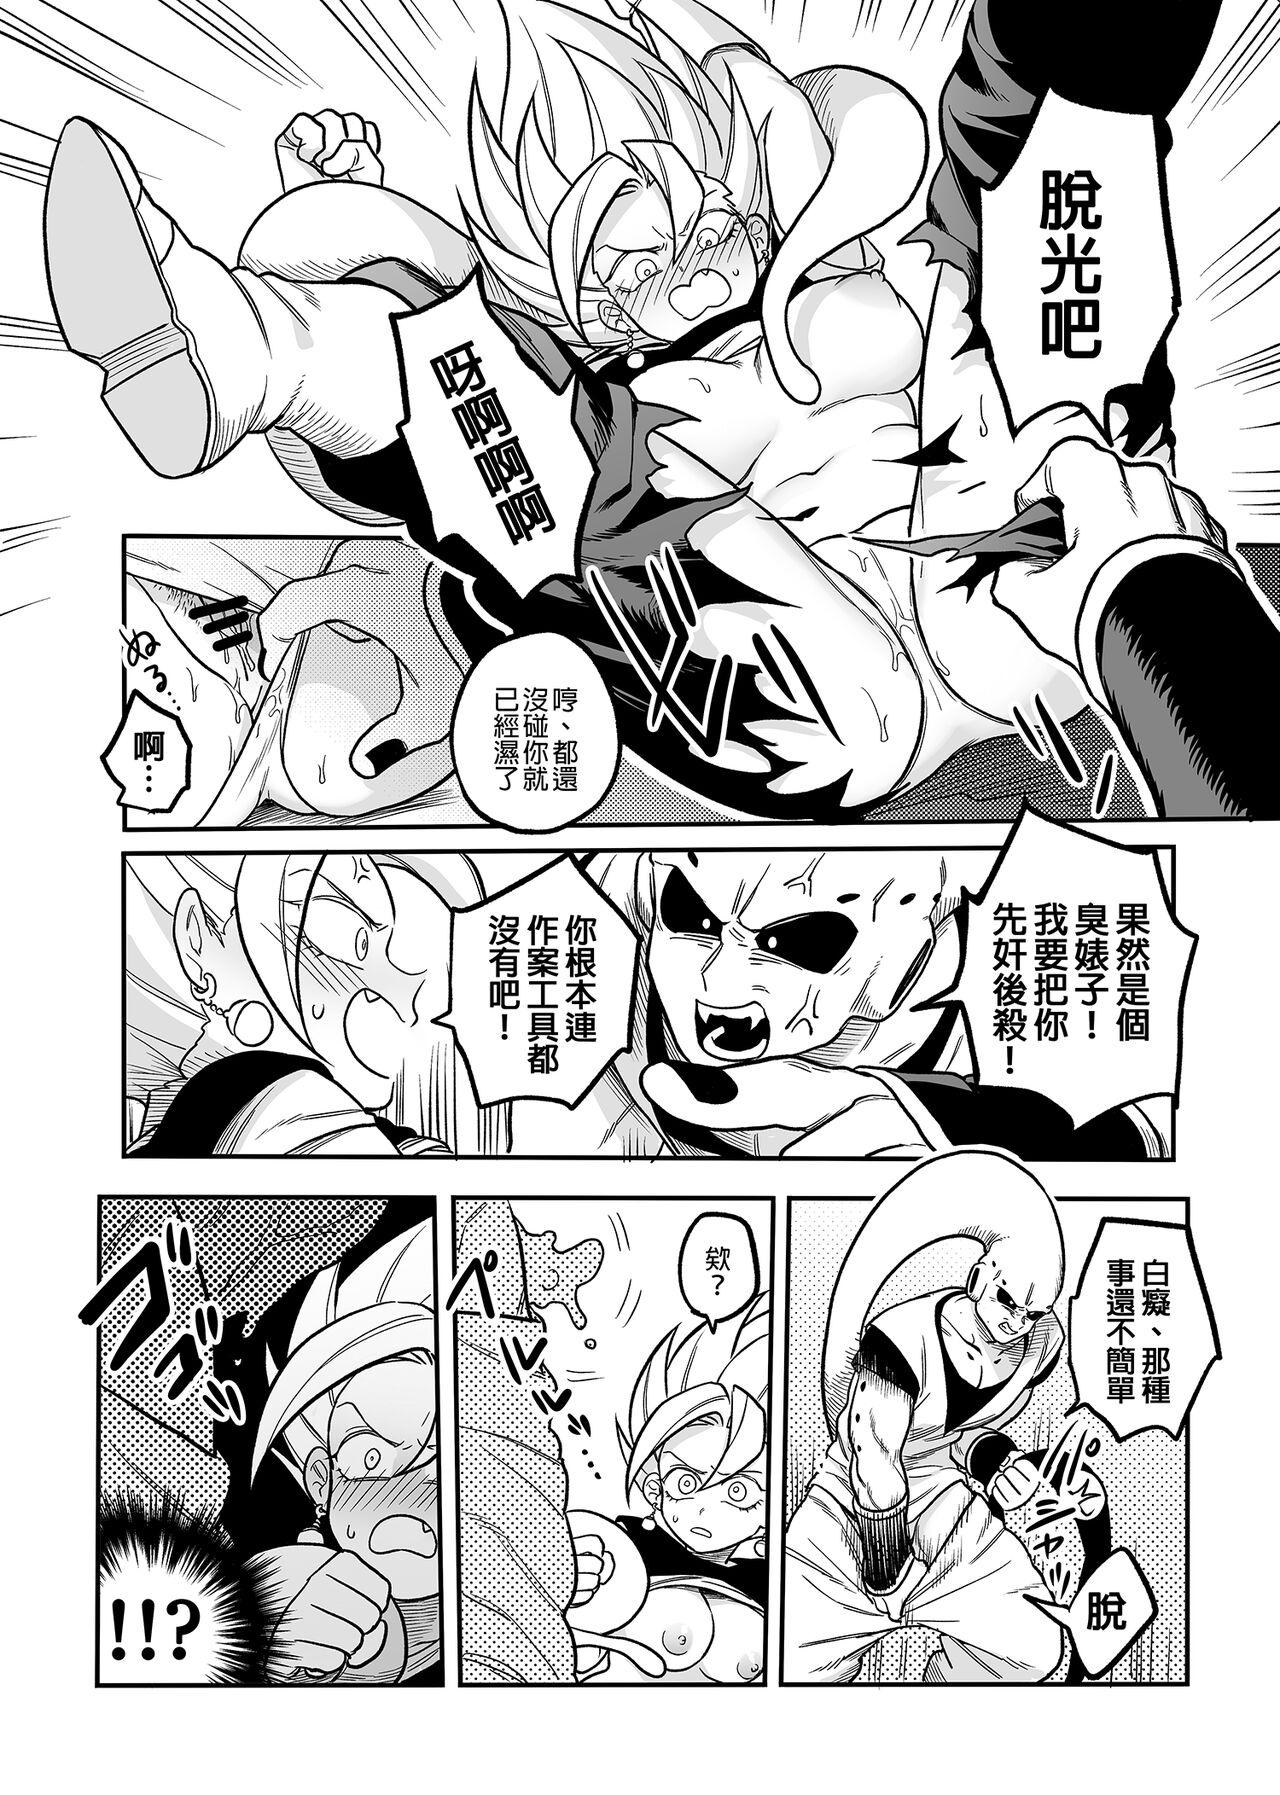 Arrecha Tada no Zako Majin na no ni... - Dragon ball z Punished - Page 5